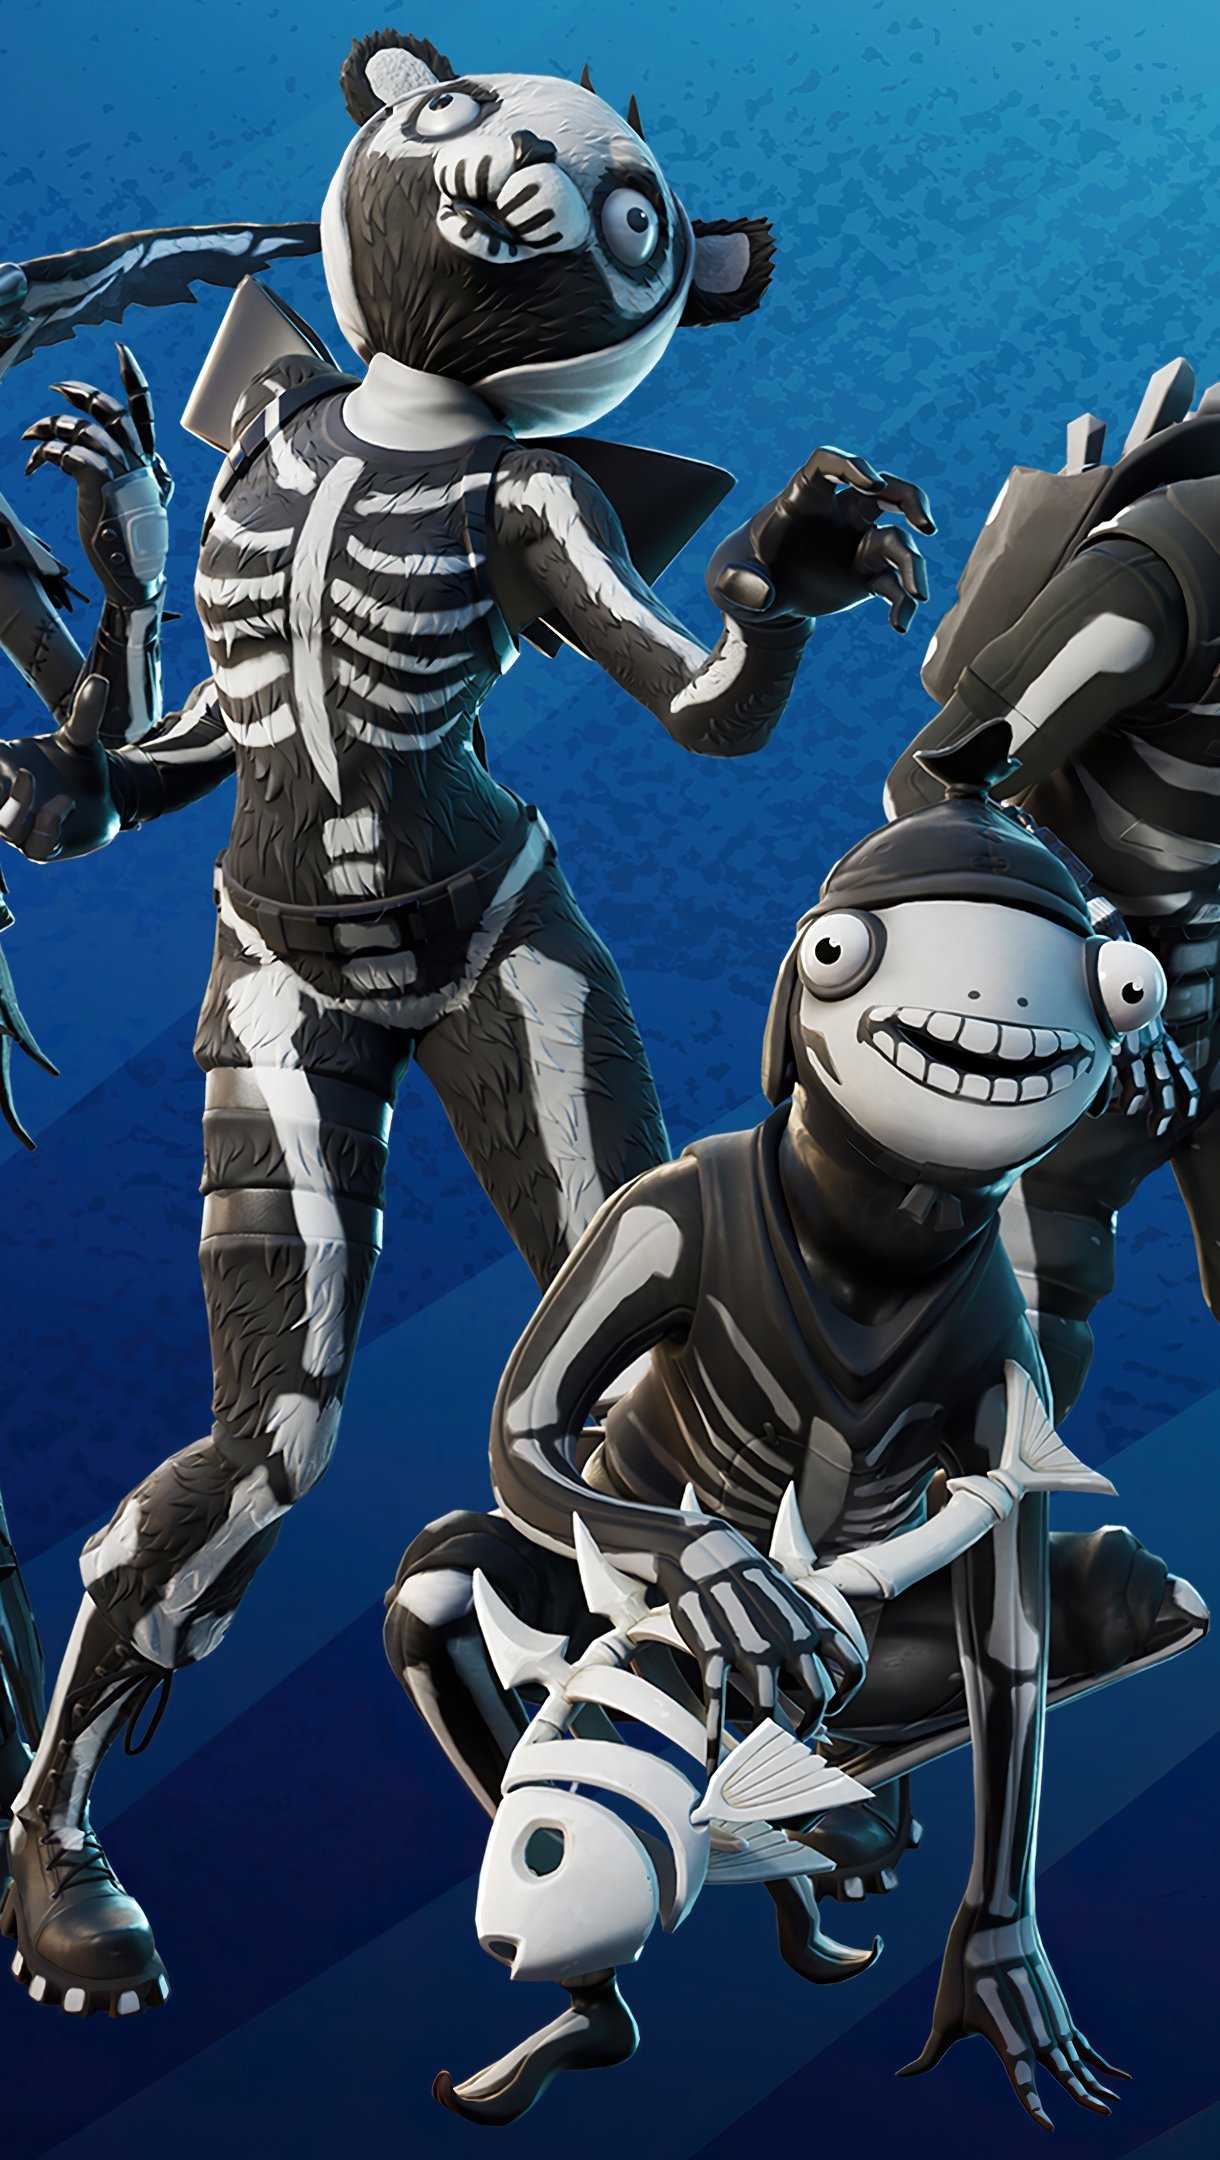 Wallpaper Fortnite Skull squad pack skins Halloween outfits Vertical